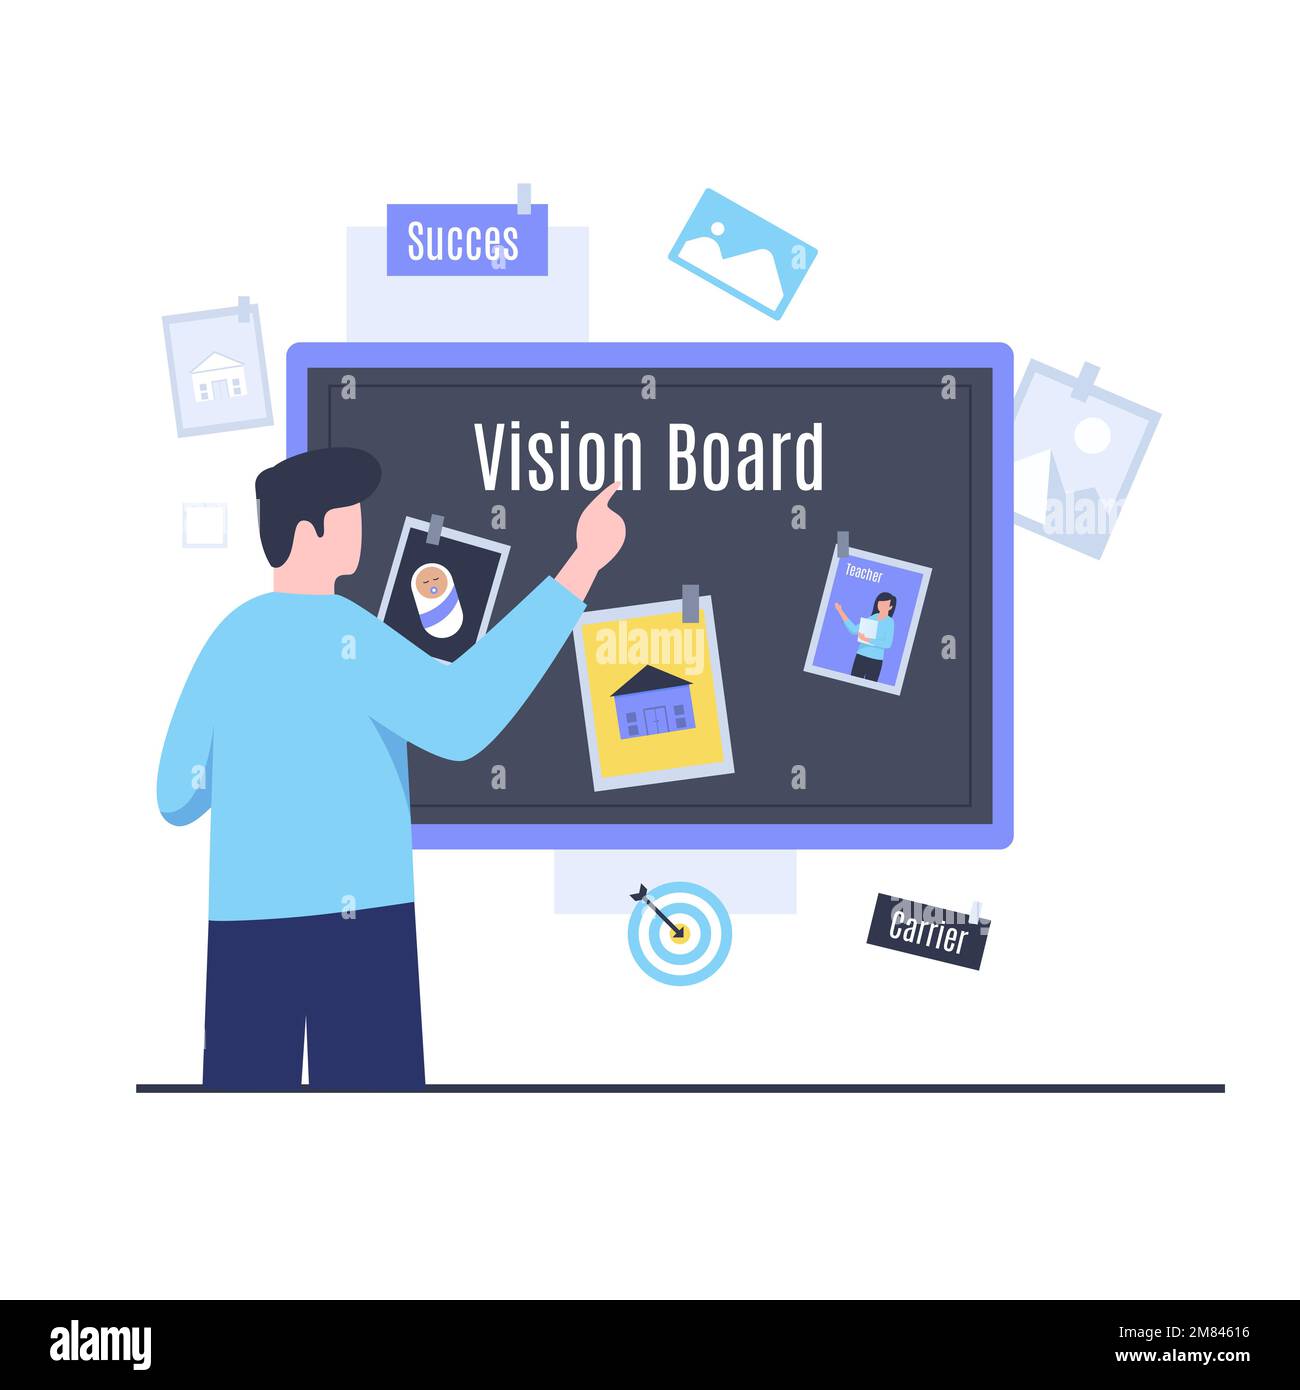 Vision Board Poster, Vectors